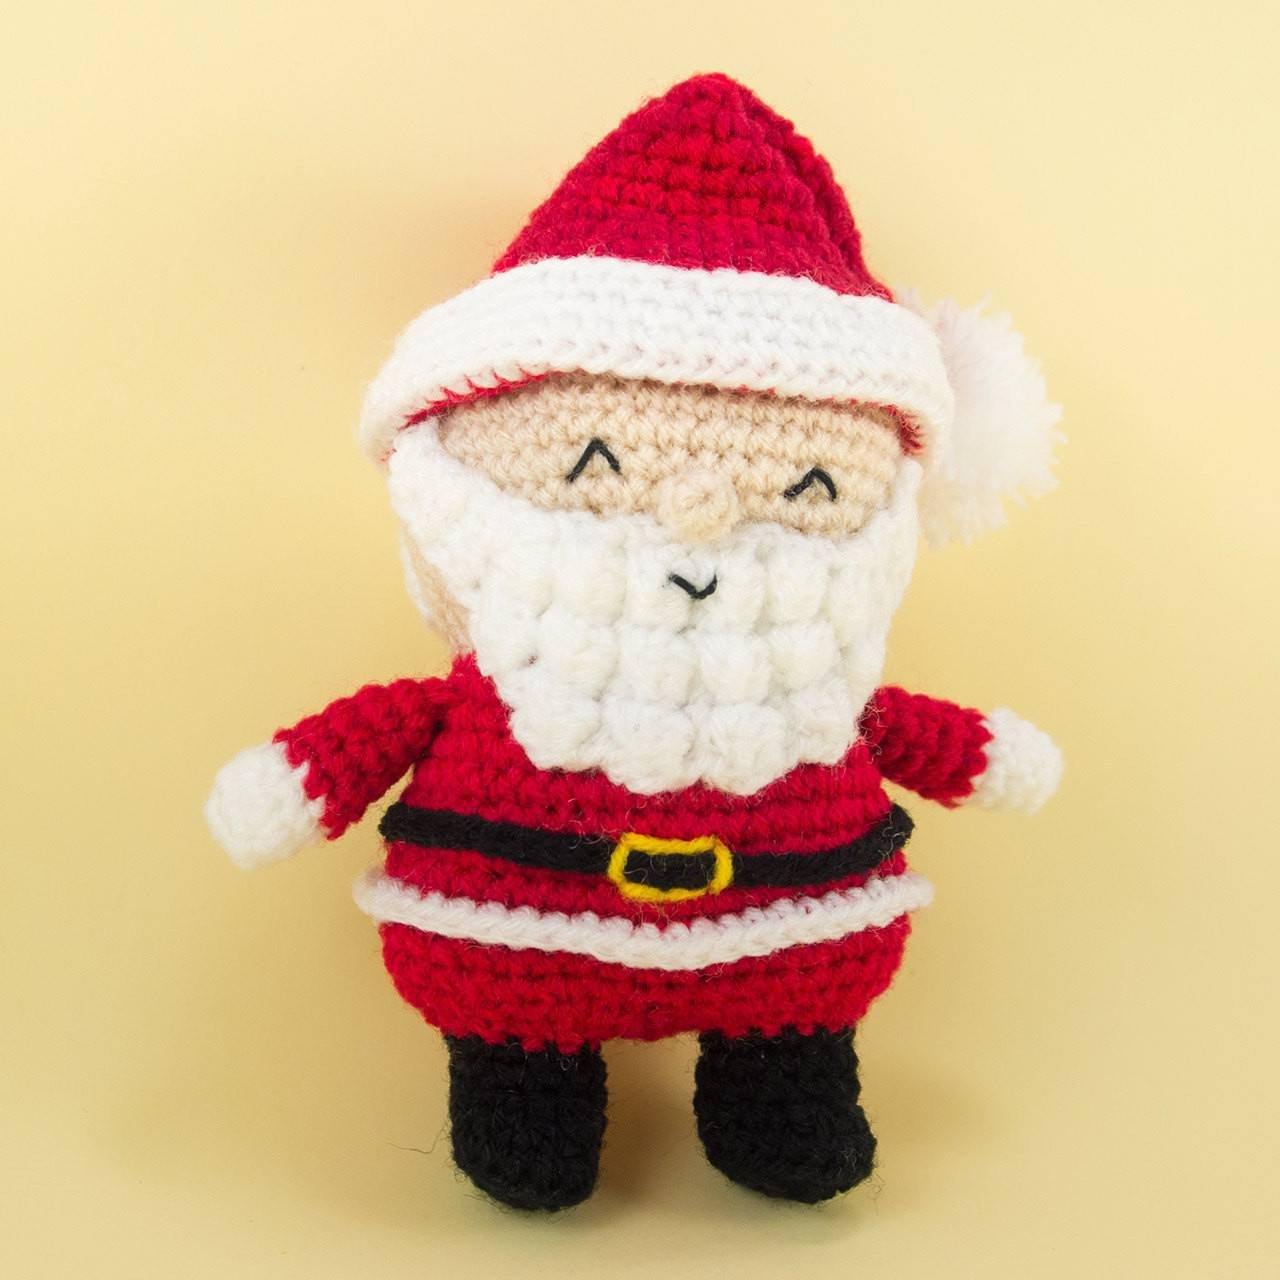 Amigurumi Santa Claus Crochet Pattern